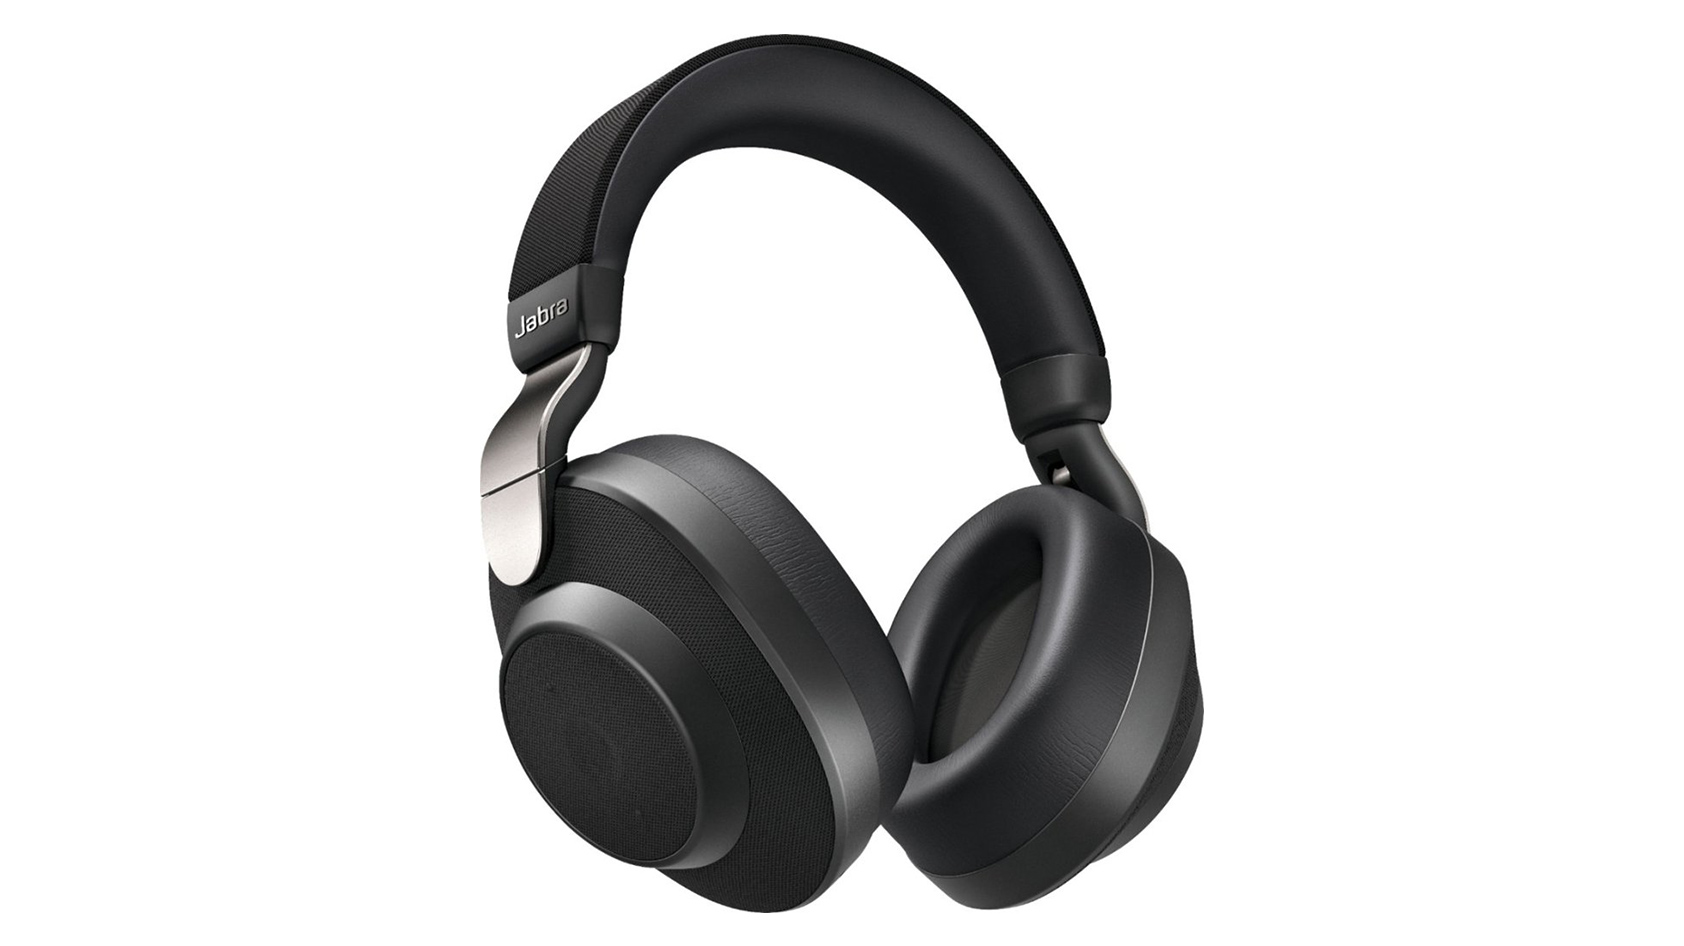 Jabra Elite 85h noise canceling headphones product image in black against a white background.